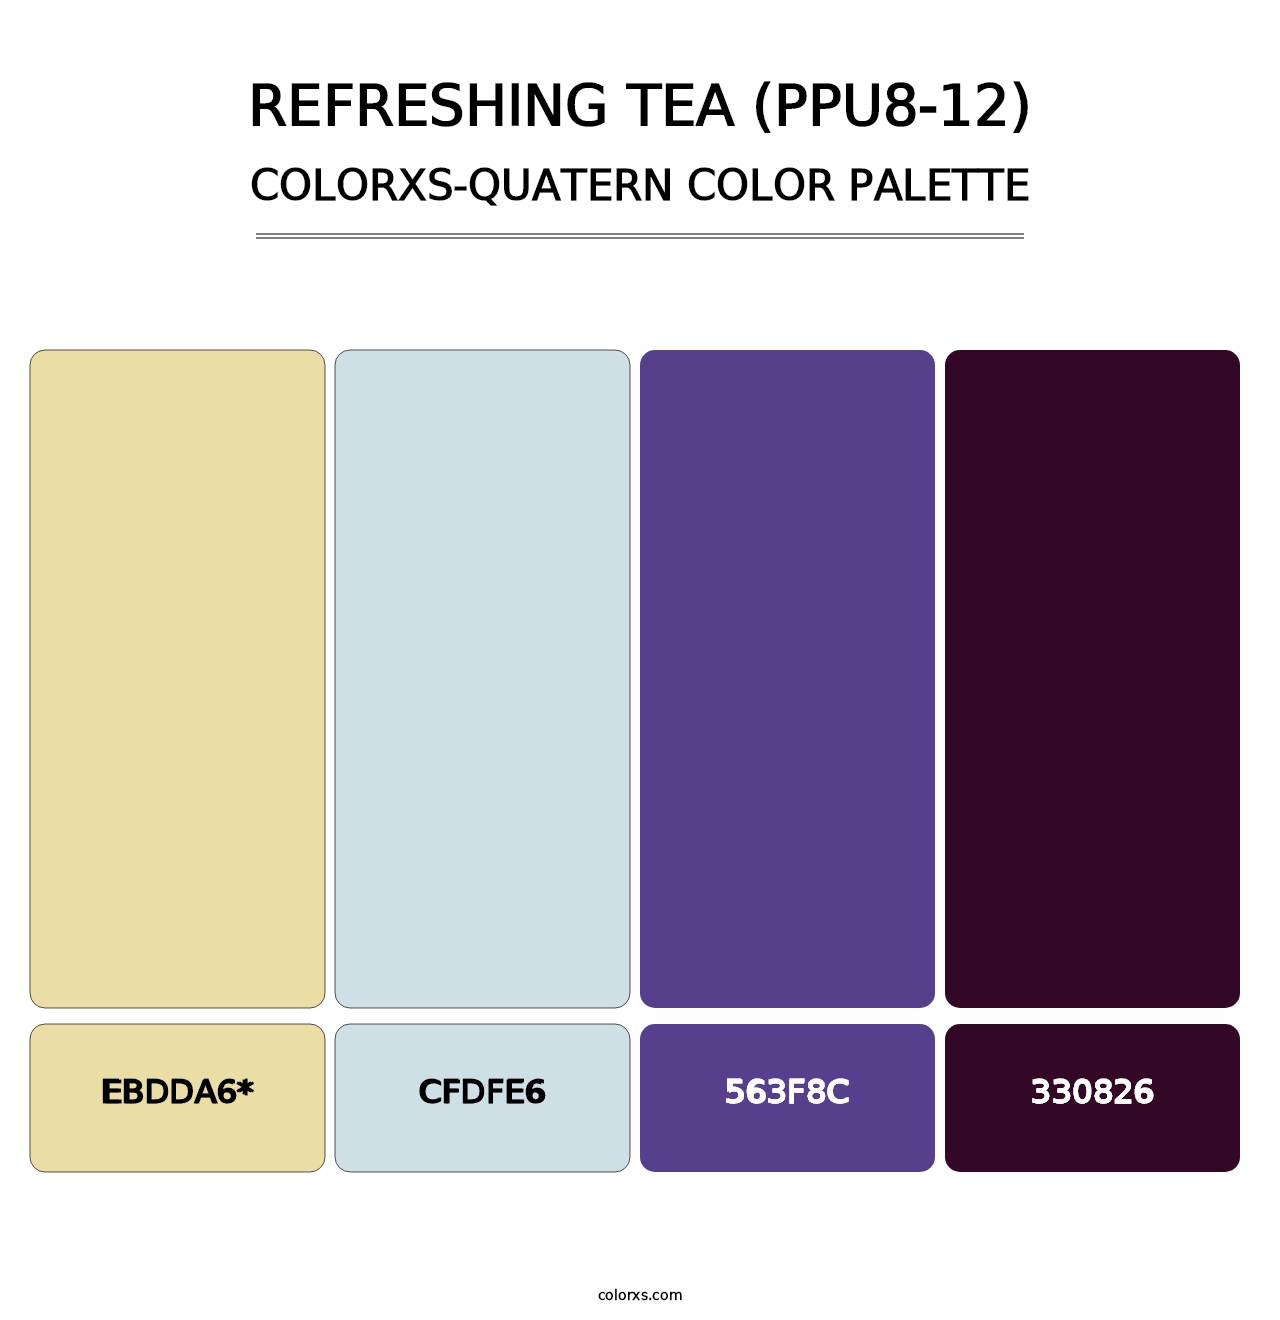 Refreshing Tea (PPU8-12) - Colorxs Quatern Palette